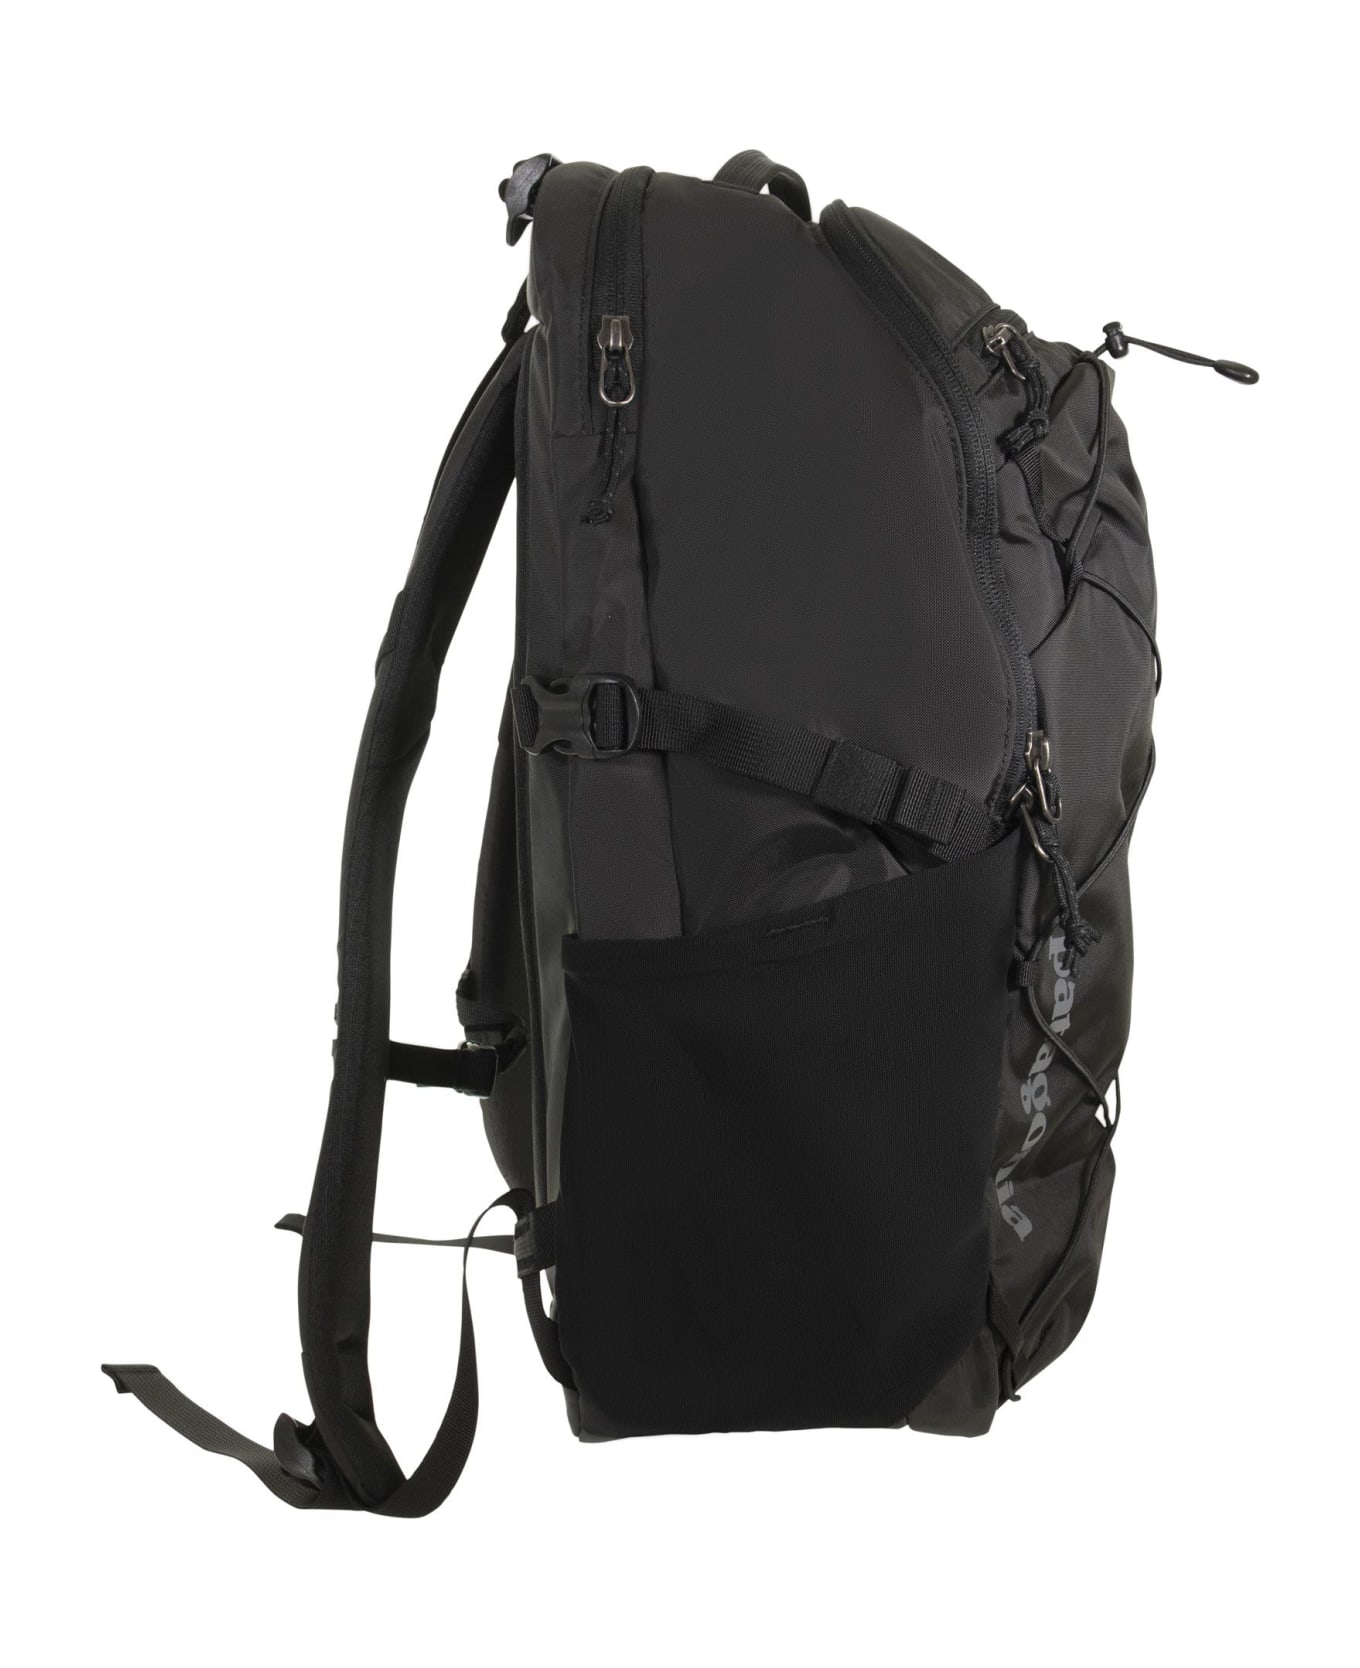 Patagonia Refugio Day Pack - Backpack - Black バックパック